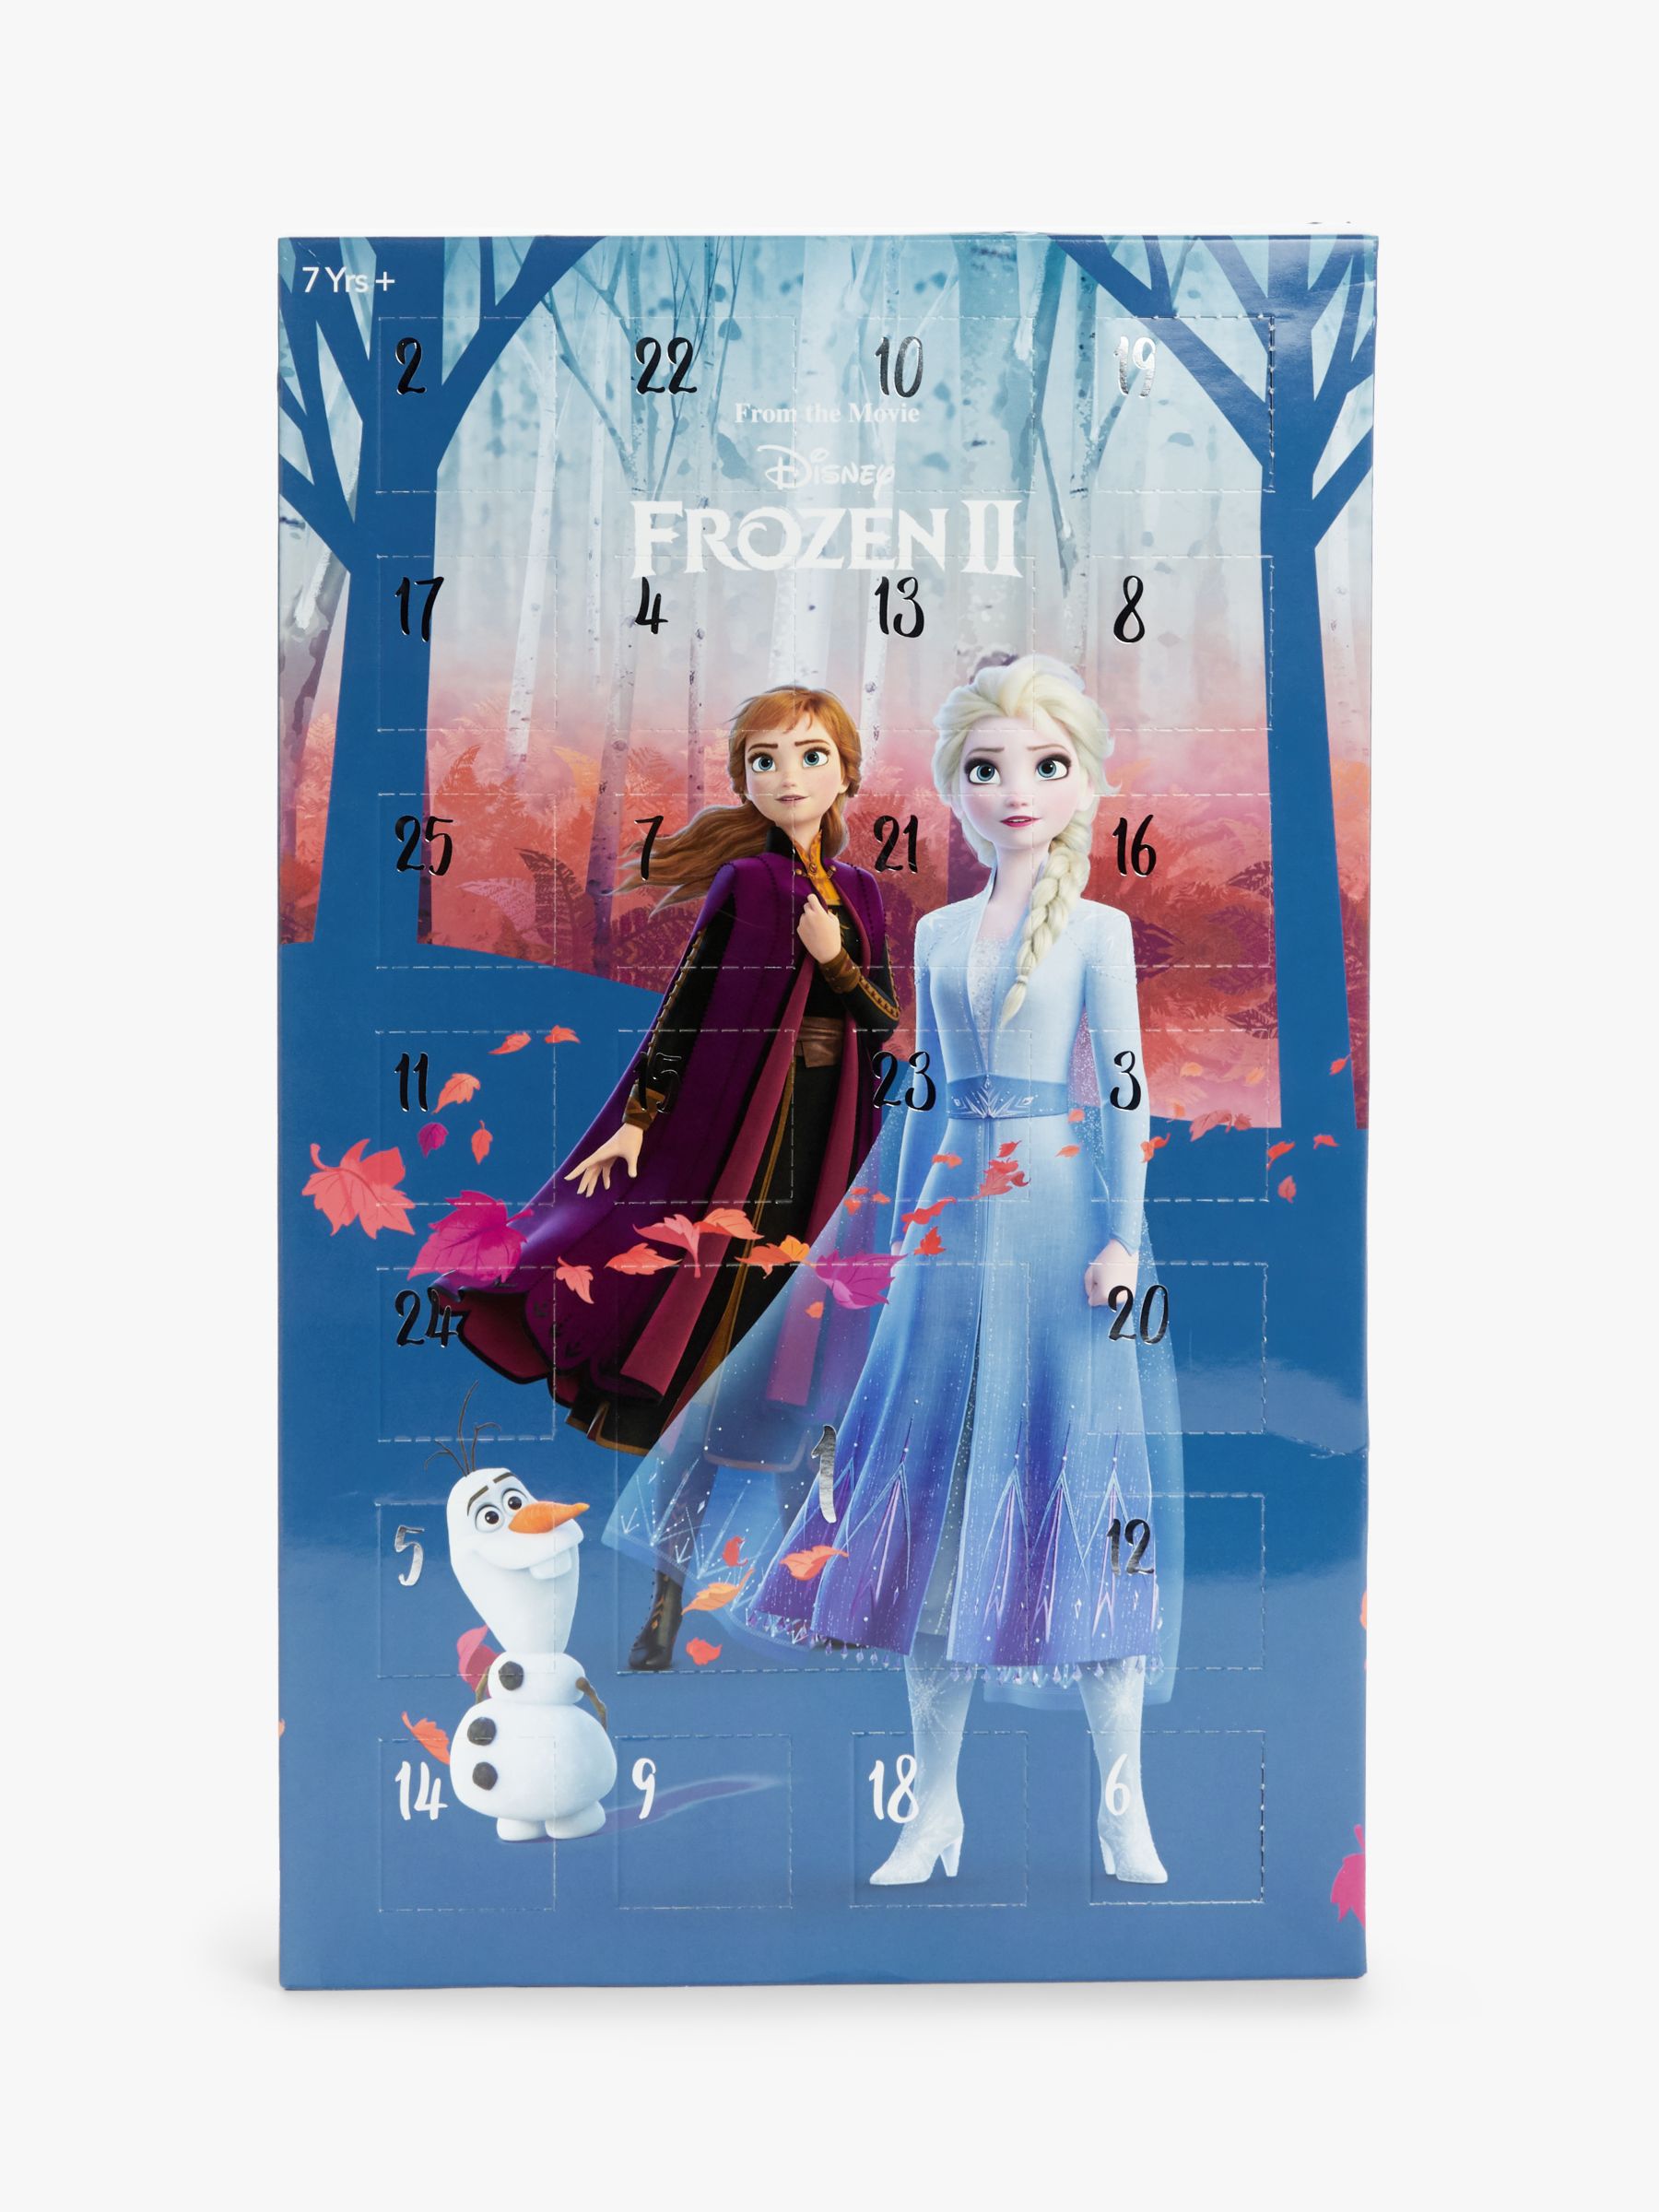 Frozen II Jewellery Advent Calendar 2019 at John Lewis & Partners